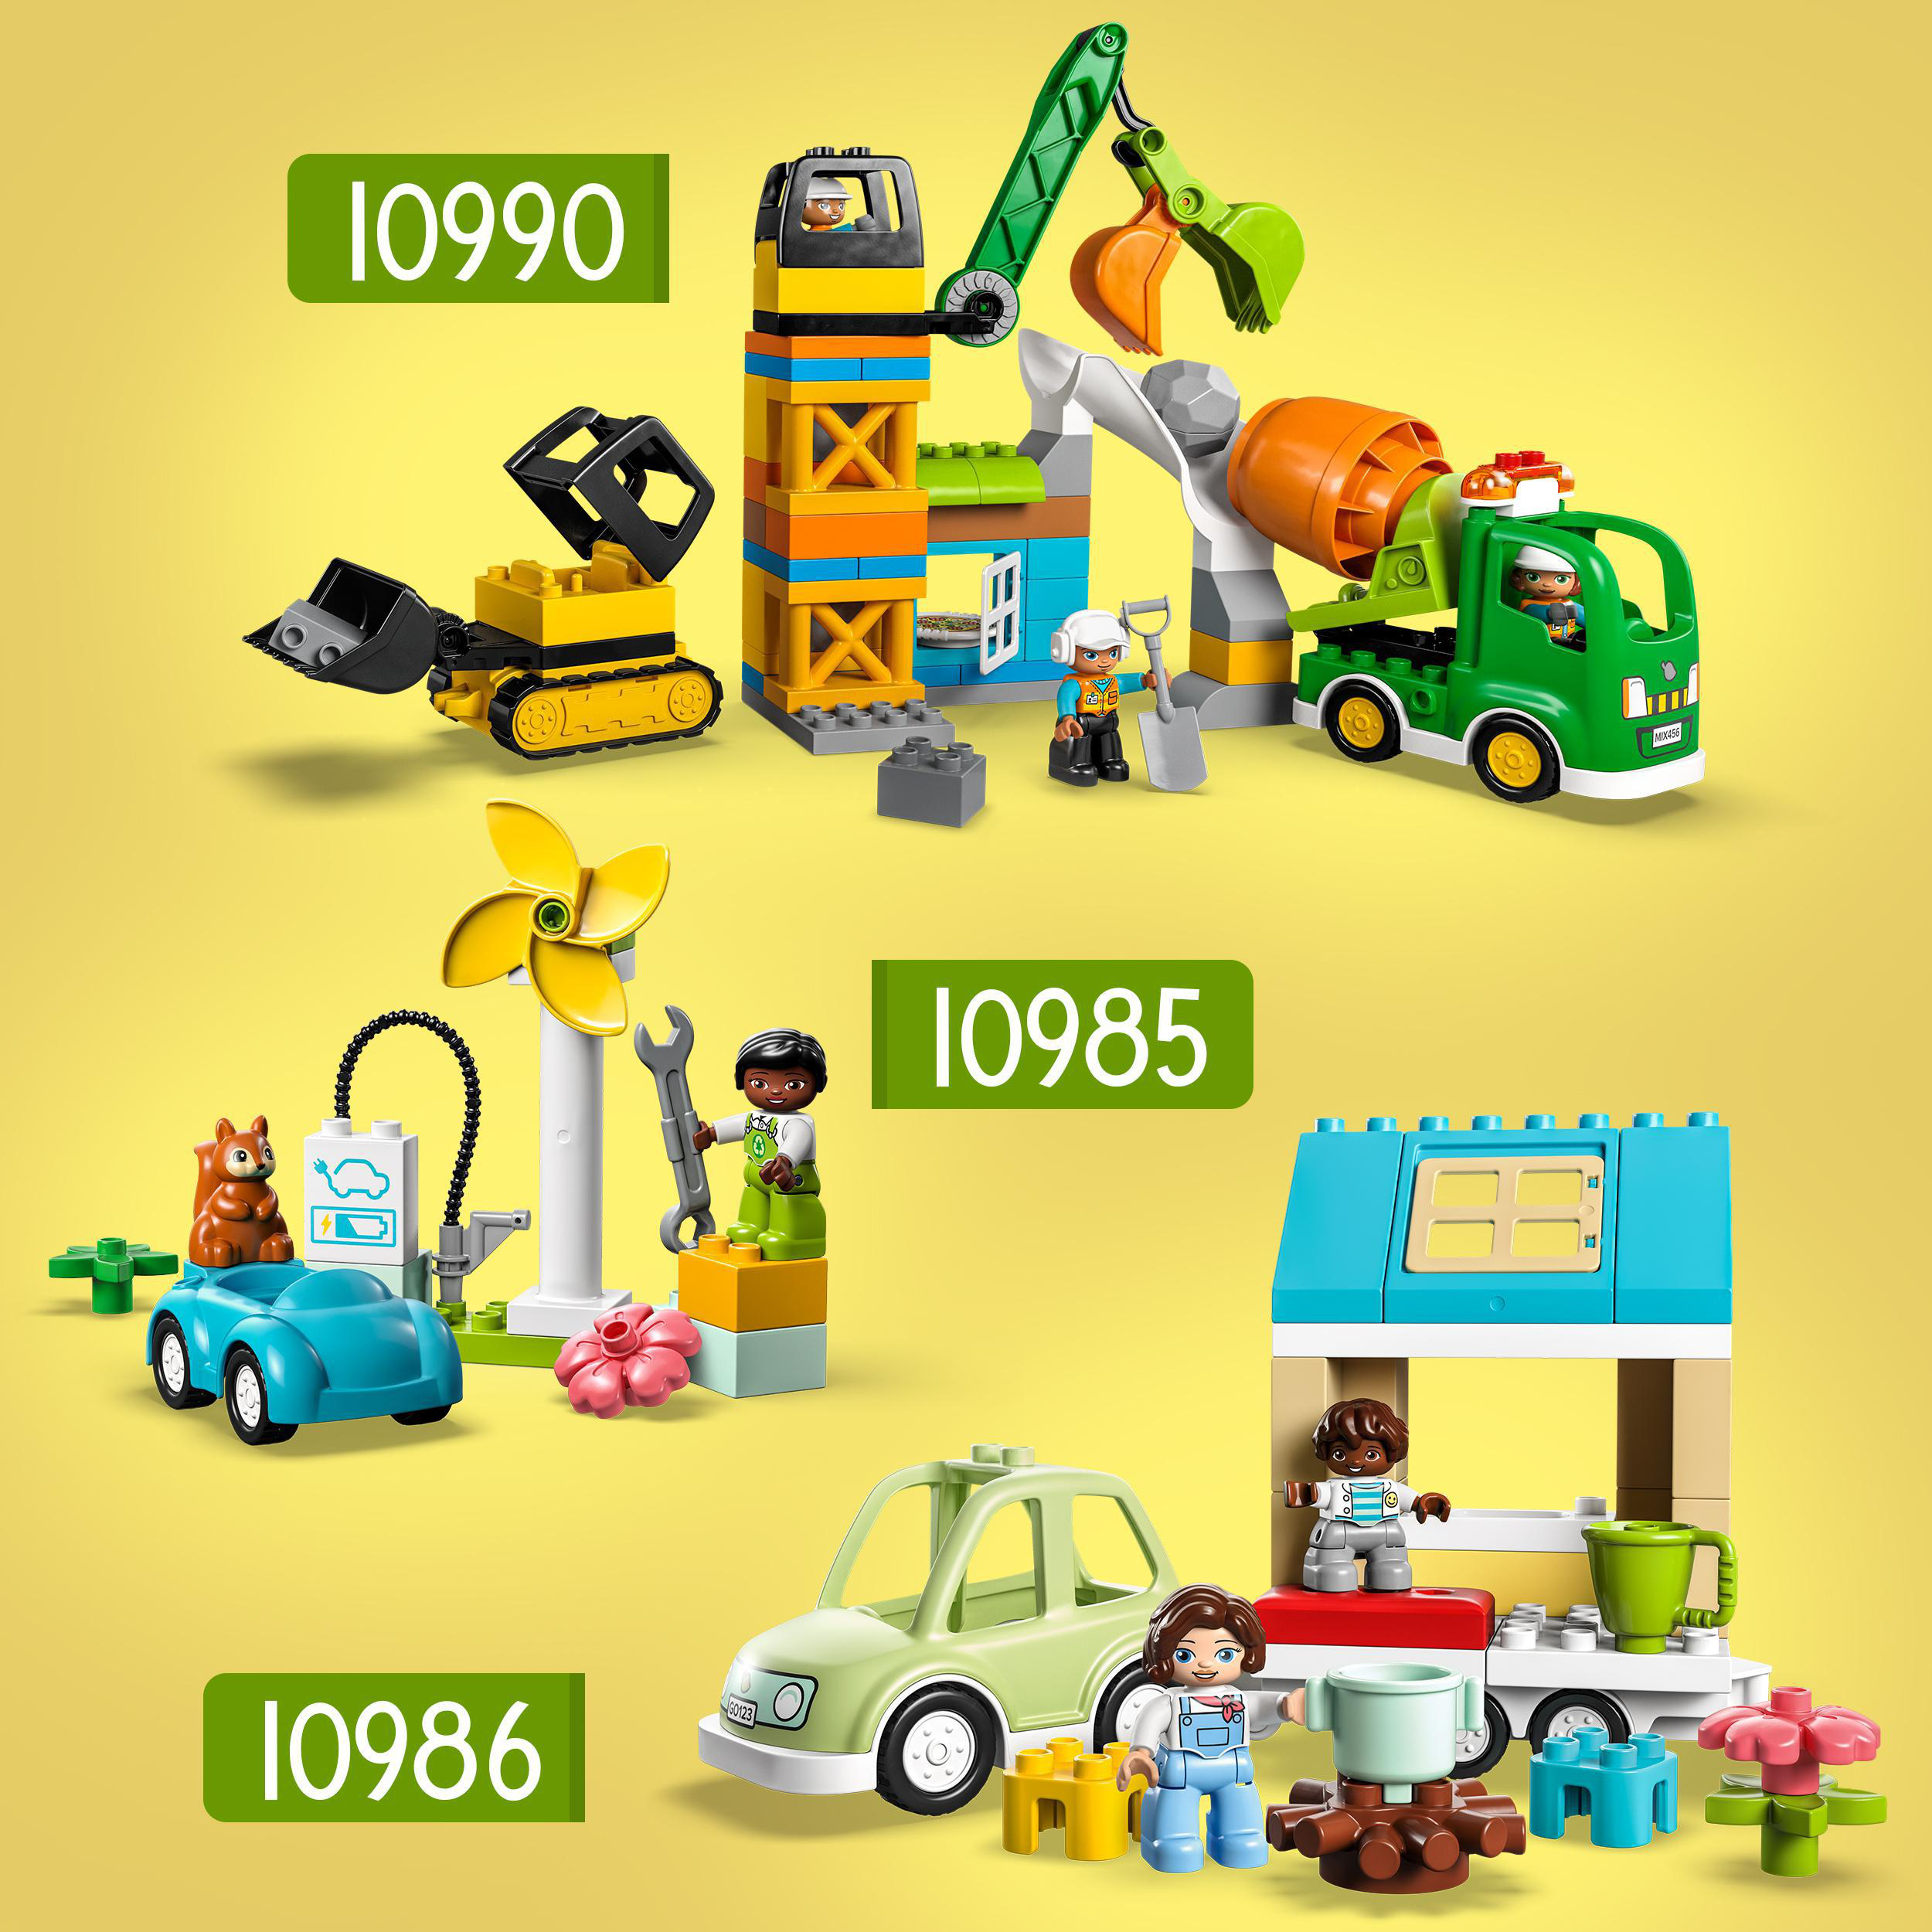 Windrad DUPLO LEGO Town und Elektroauto Mehrfarbig Bausatz, 10985